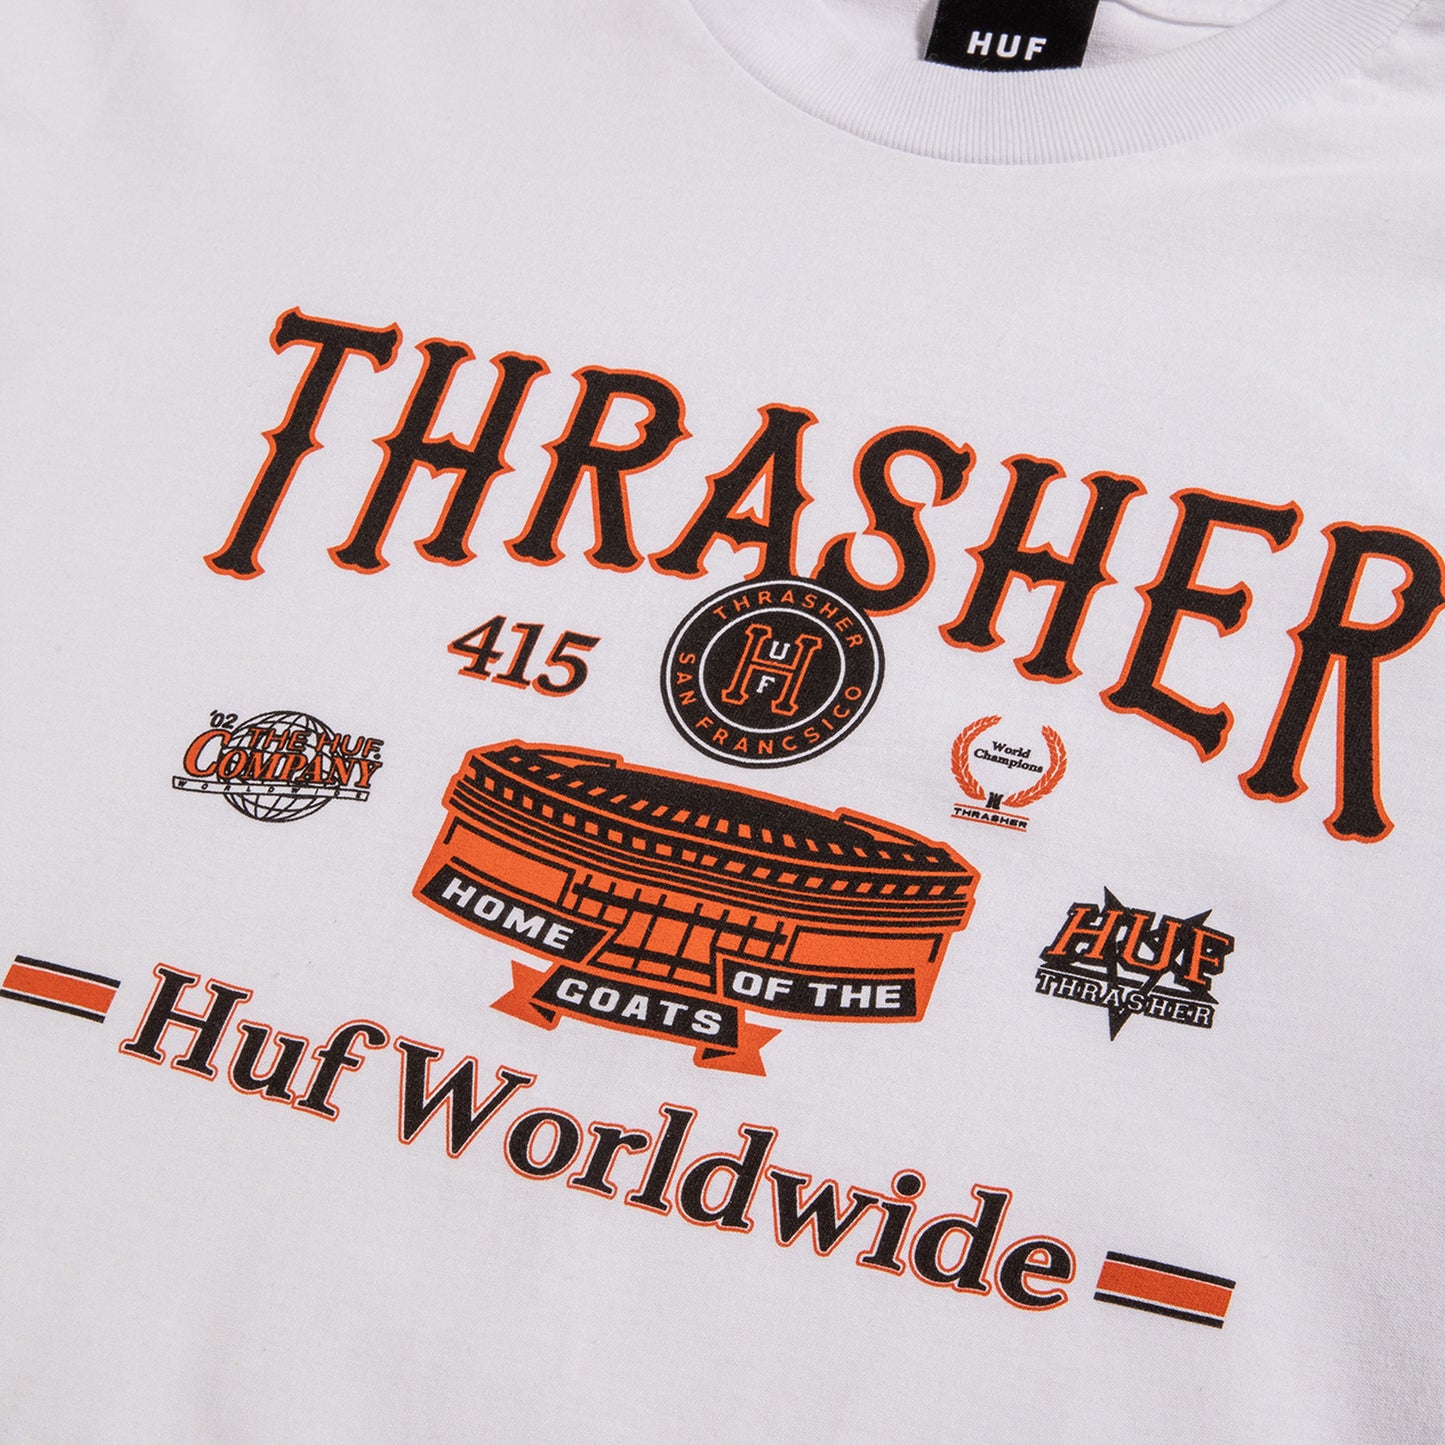 HUF x Thrasher Monteray LS T-Shirt